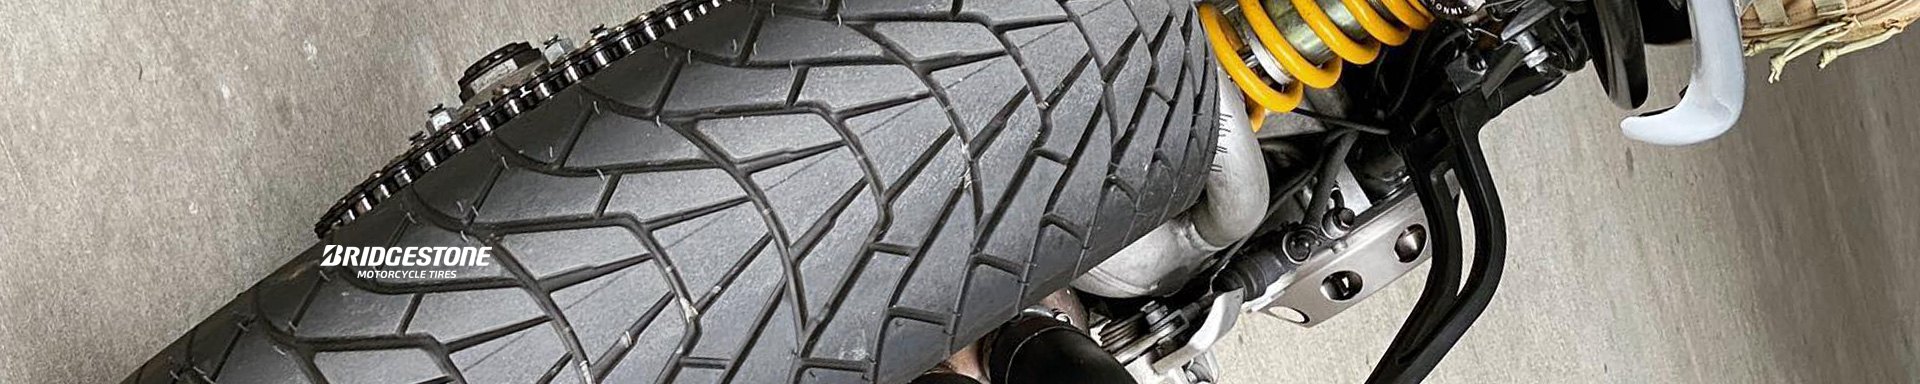 Universal Bridgestone Motorcycle Tires